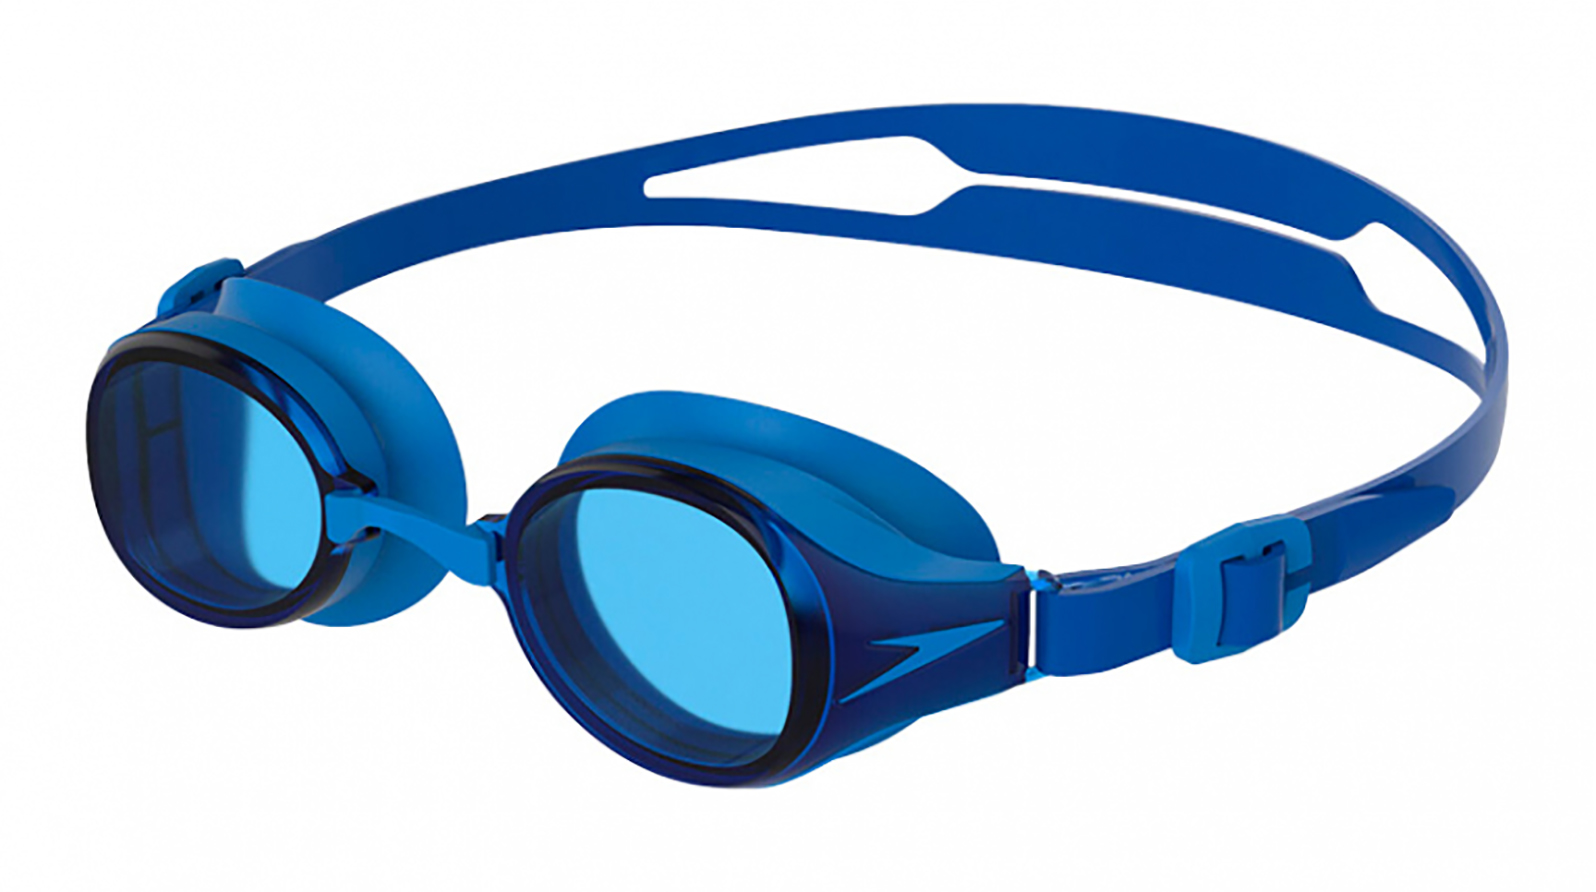 Speedo Очки для плавания Hydropure Optical F809 -4.5 speedo очки для плавания hydropure optical f809 3 5